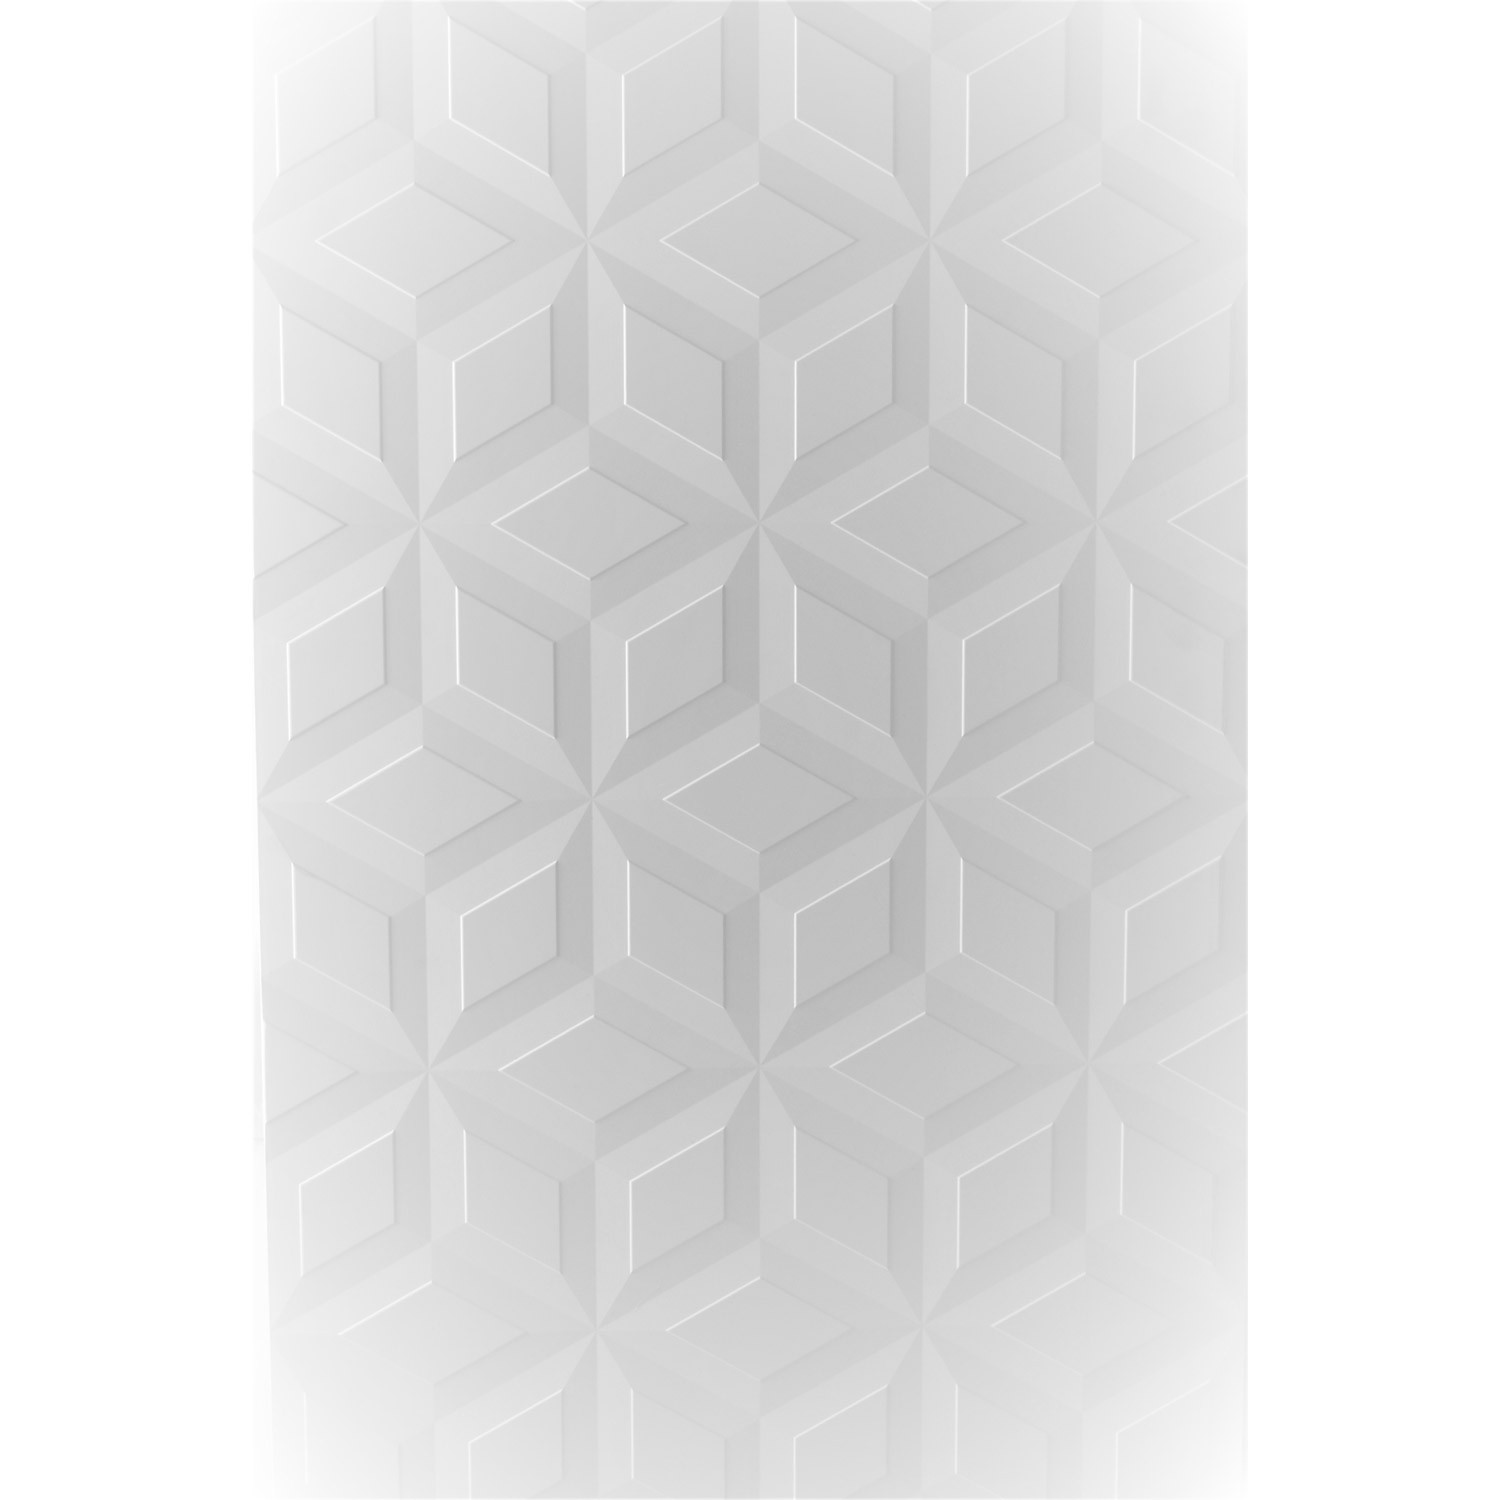 Porte de placard coulissante origami blanc SPACEO